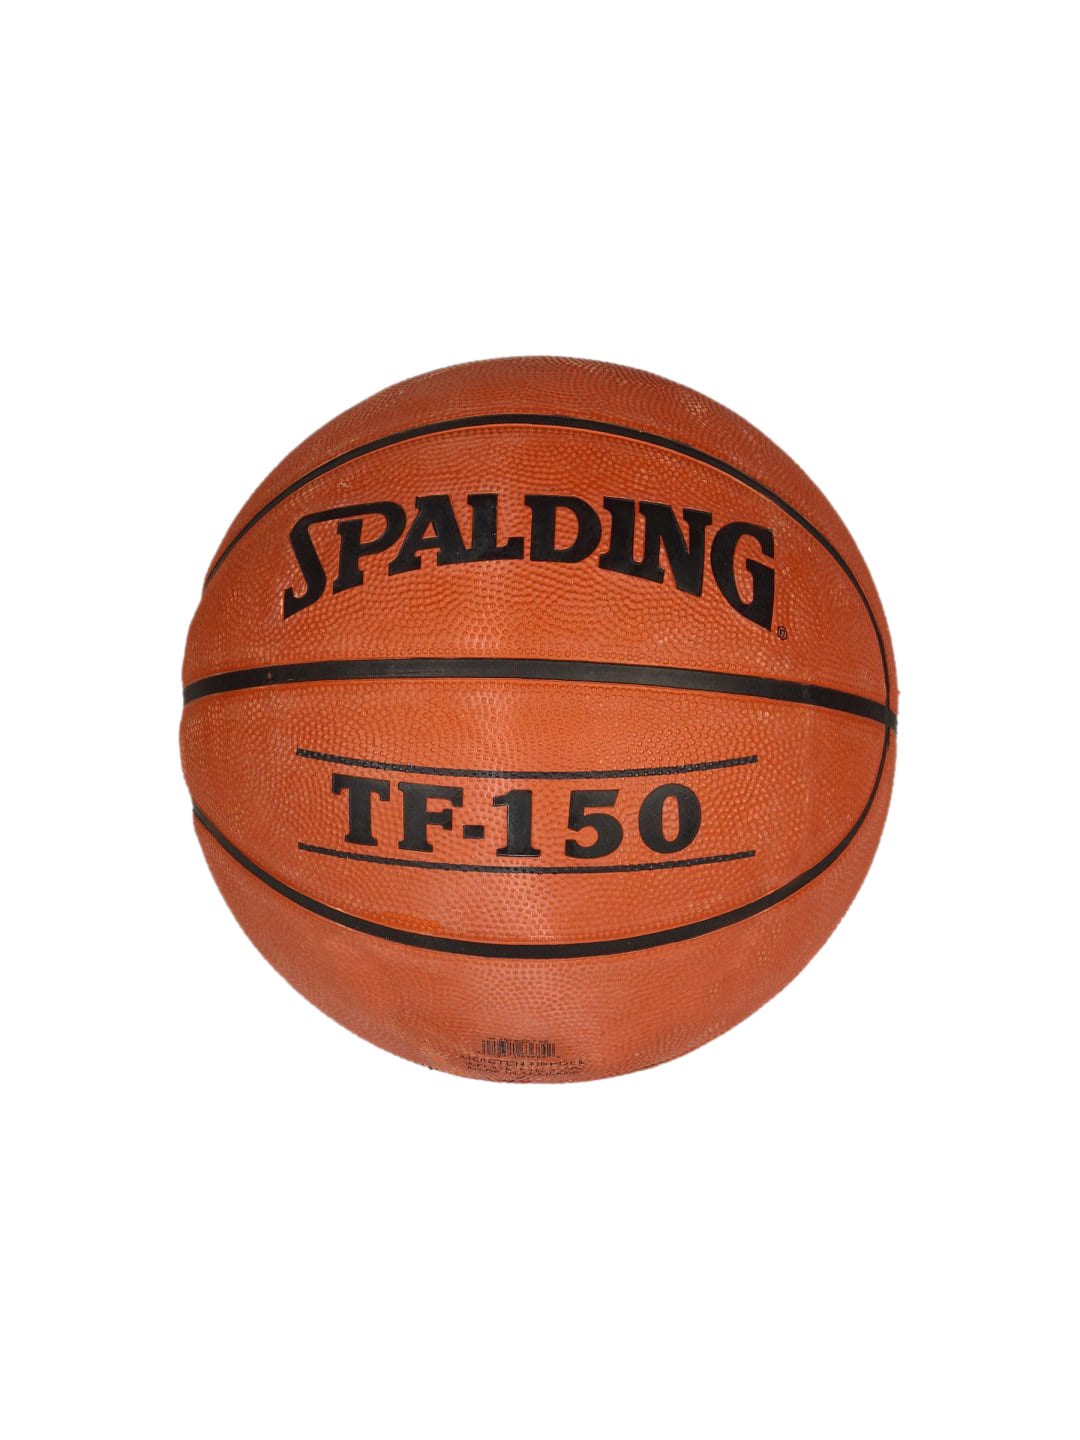 Spalding 150 SZ Brown Basketball